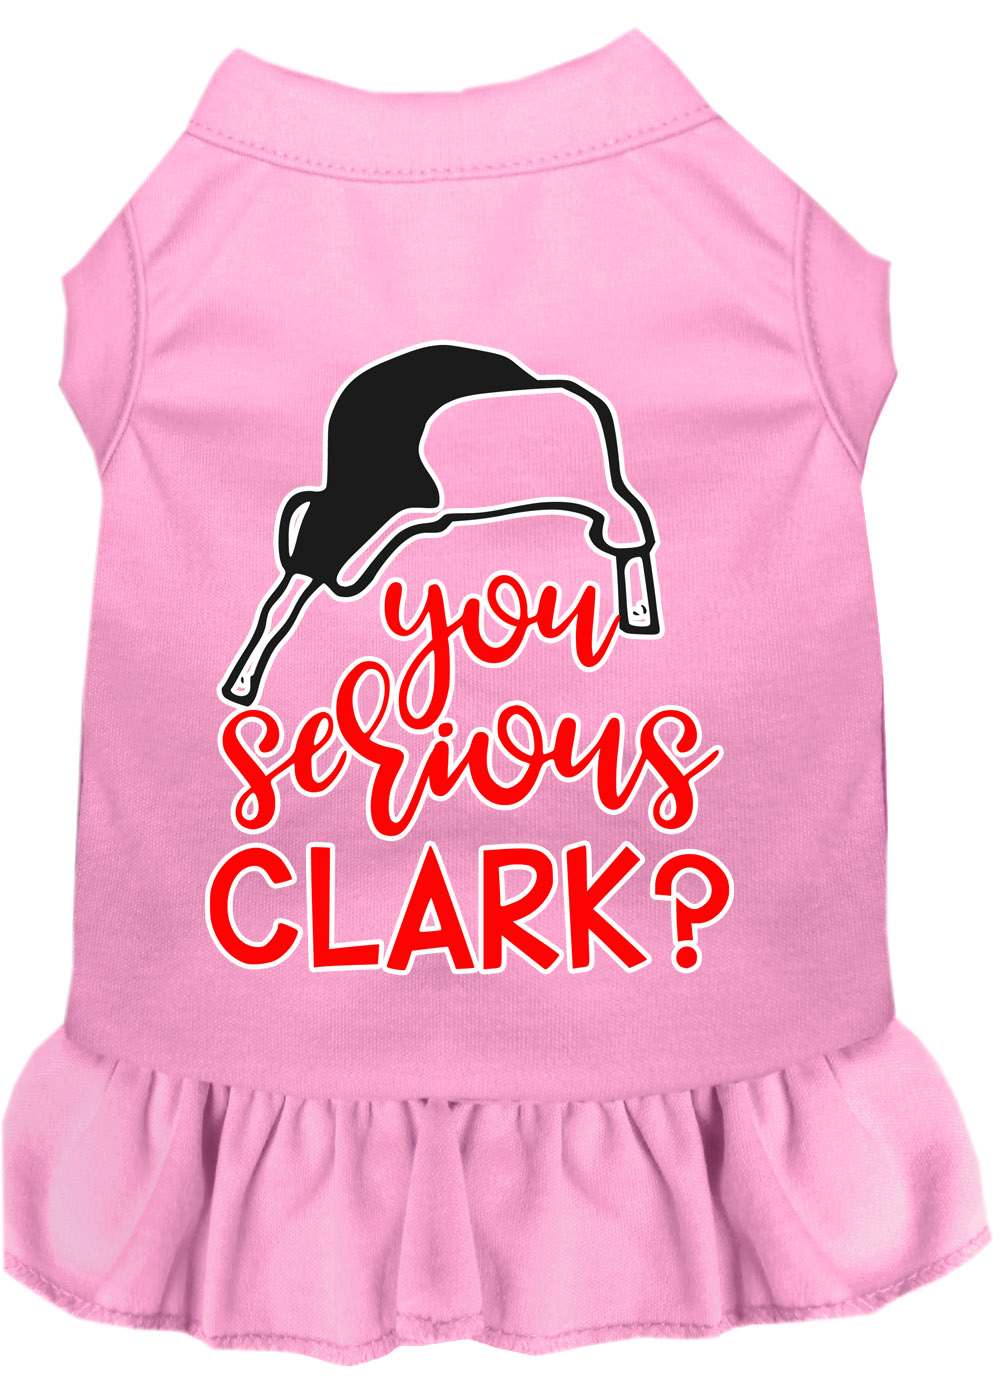 You Serious Clark? Screen Print Dog Dress Light Pink XXXL